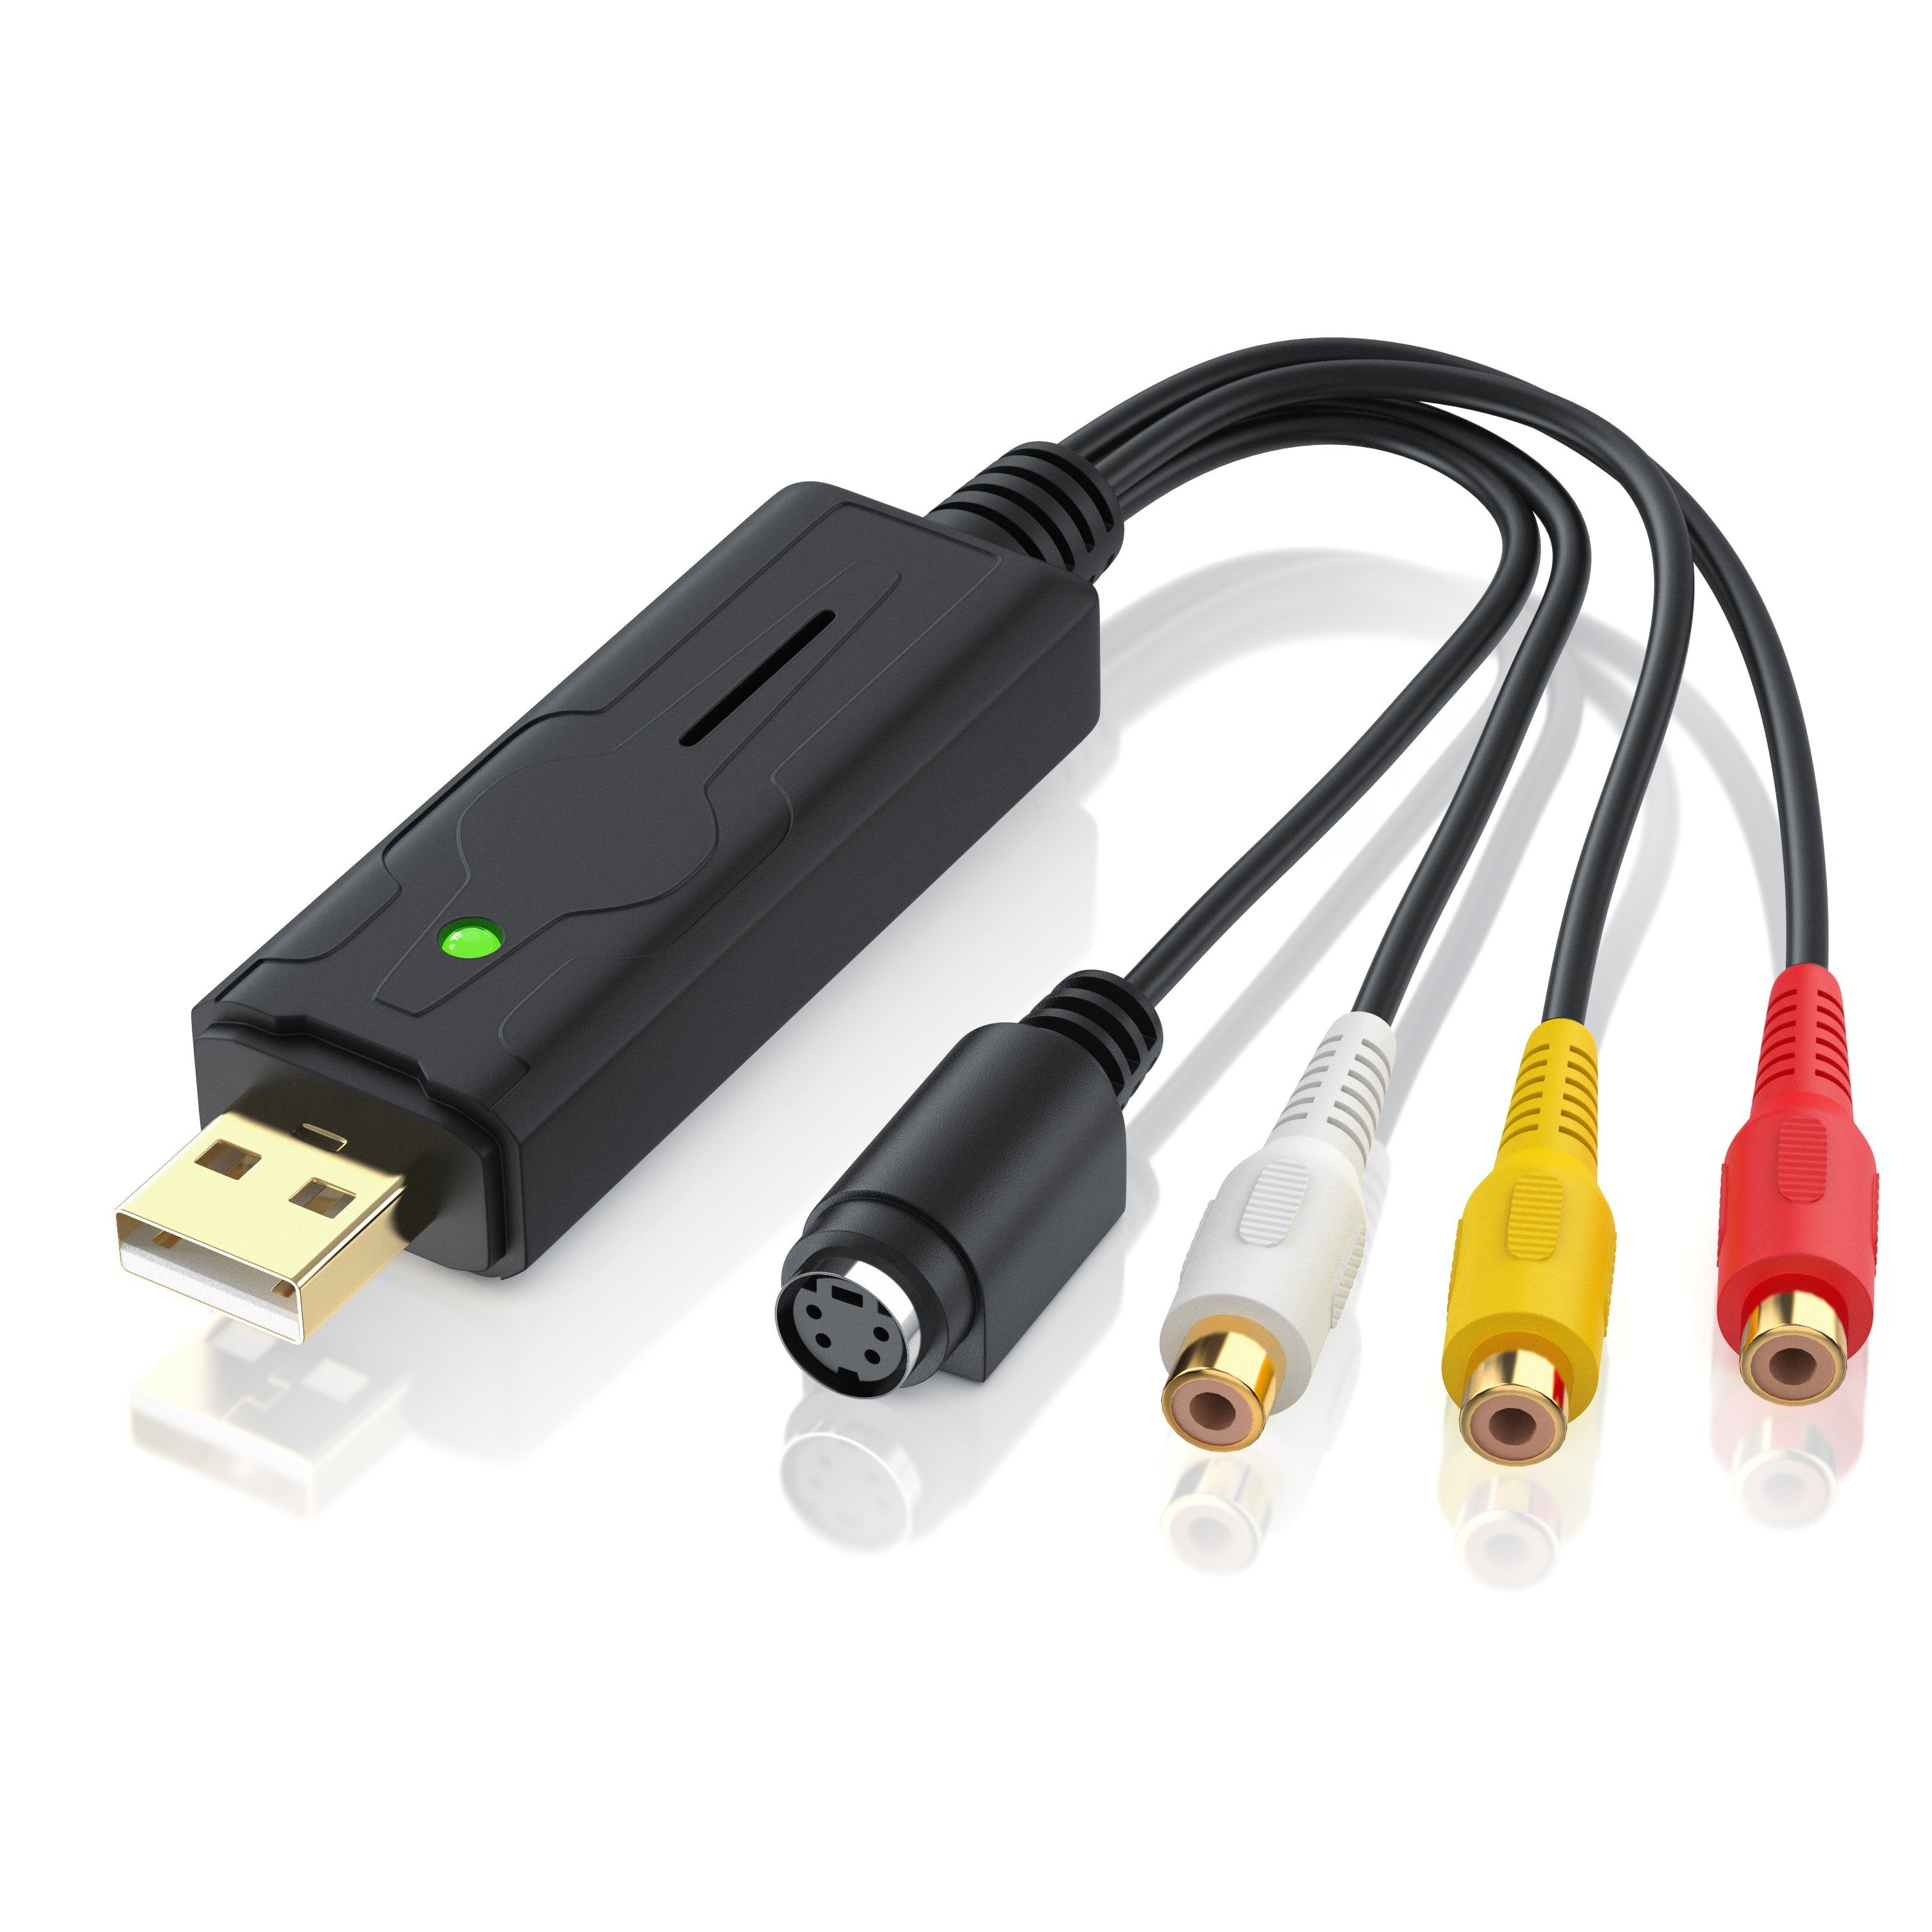 Aplic Audio- & Video-Adapter zu USB 2.0 Typ A; S-Video Buchse (Mini-DIN 4